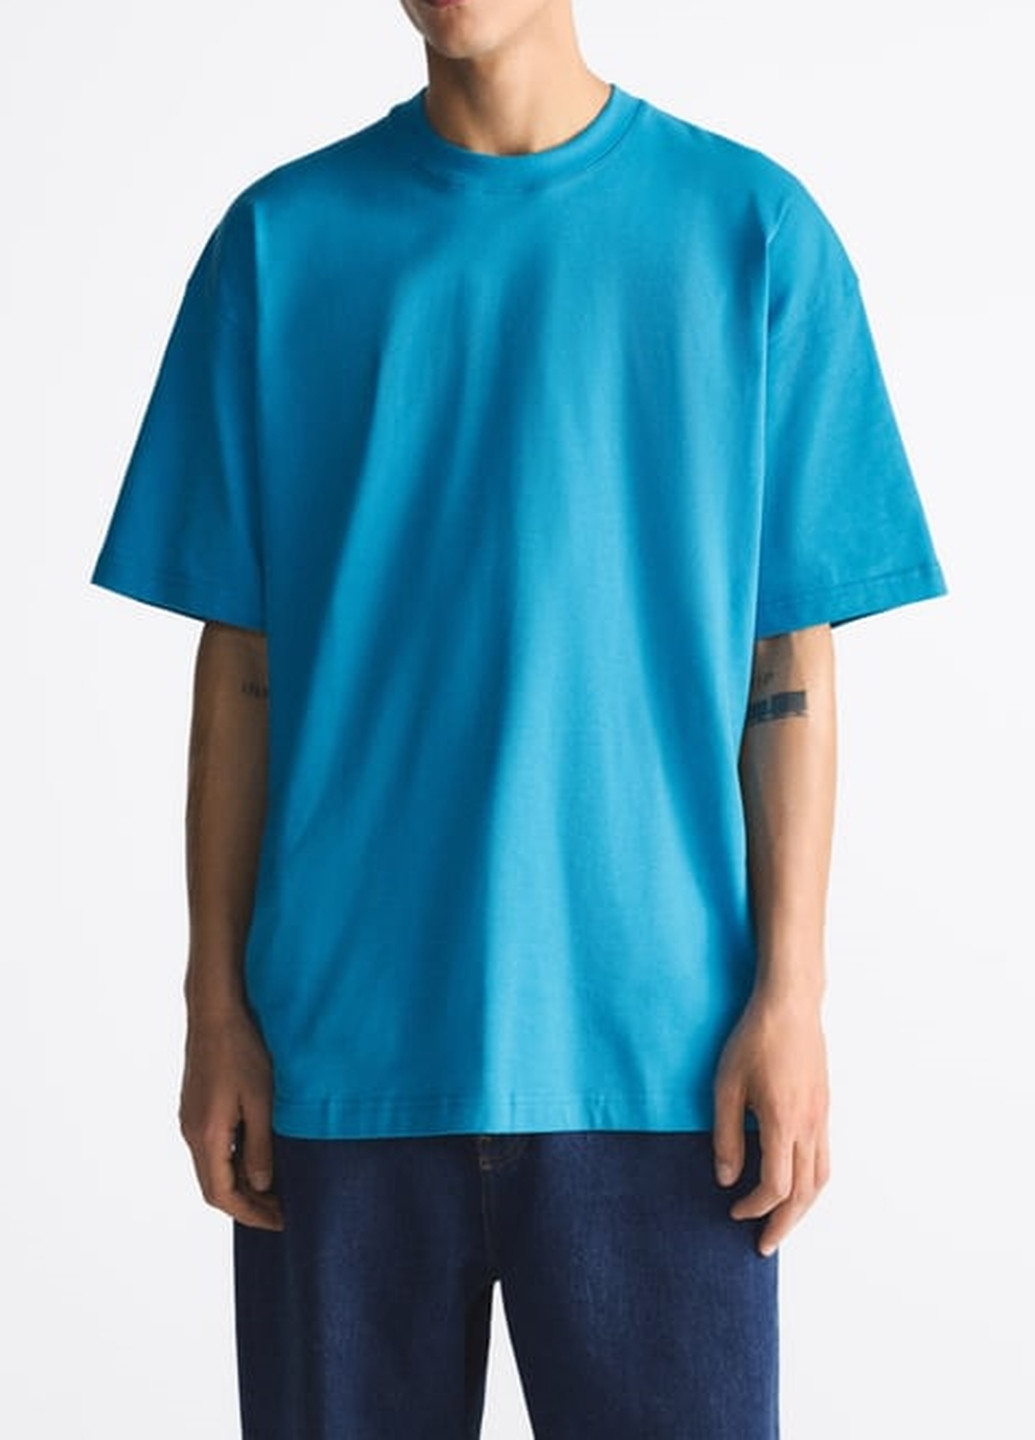 Голубая футболка Zara